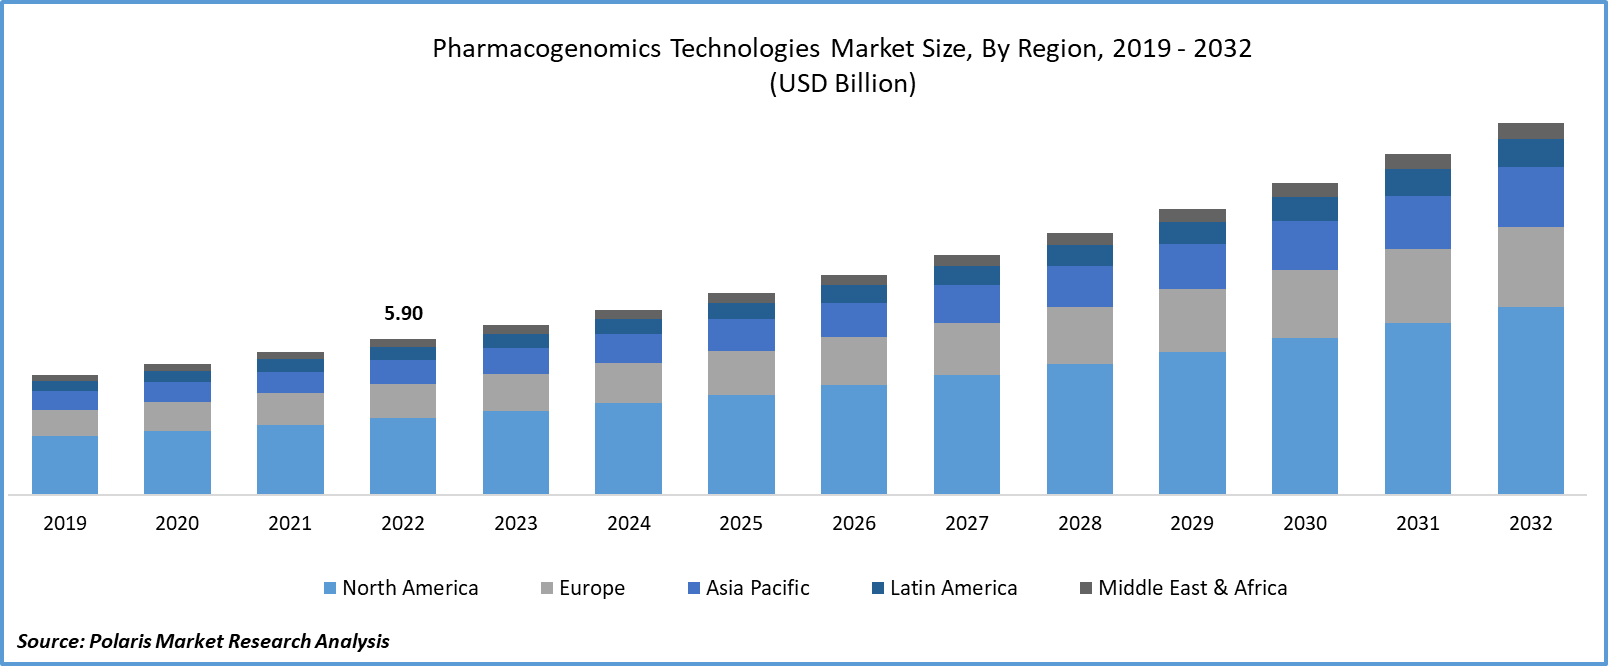 Pharmacogenomics Technologies Market Size